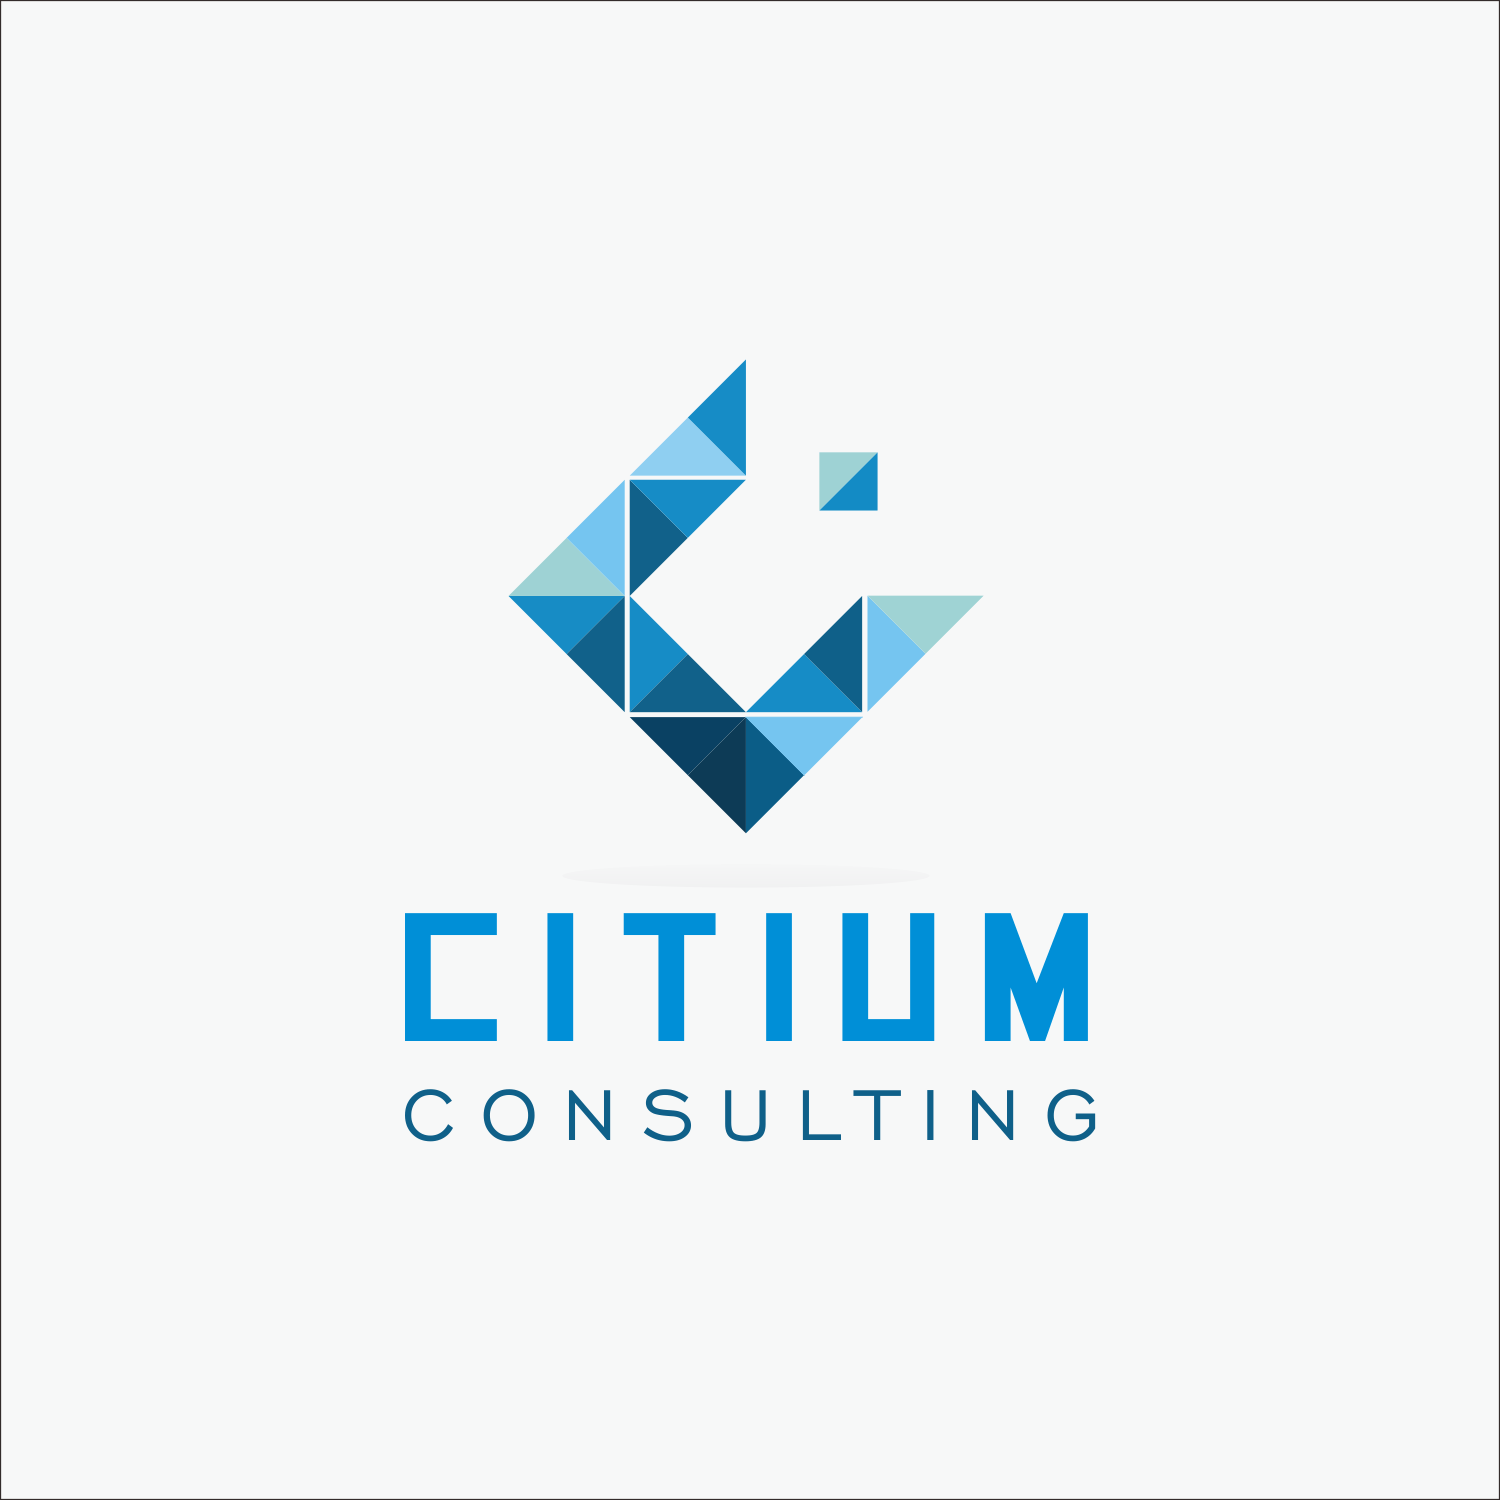 Consulting Logo - Modern, Professional, Business Consultant Logo Design for Citium ...